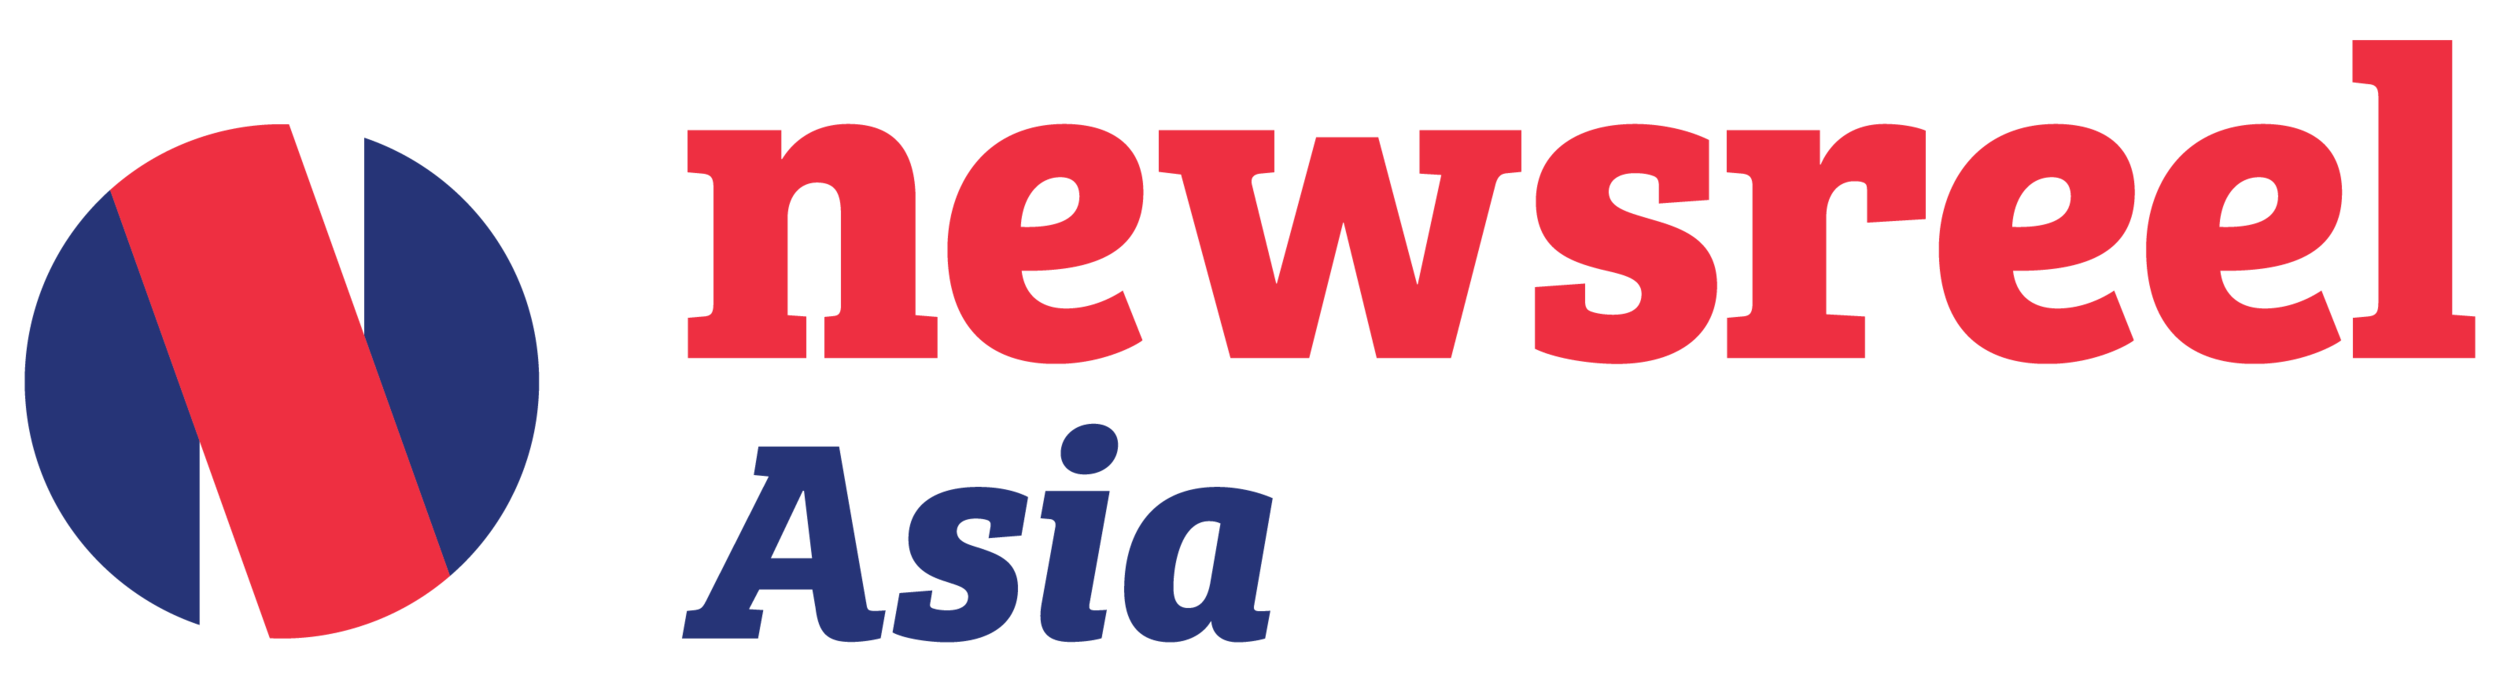 Newsreel Asia - Main Logo-color.png